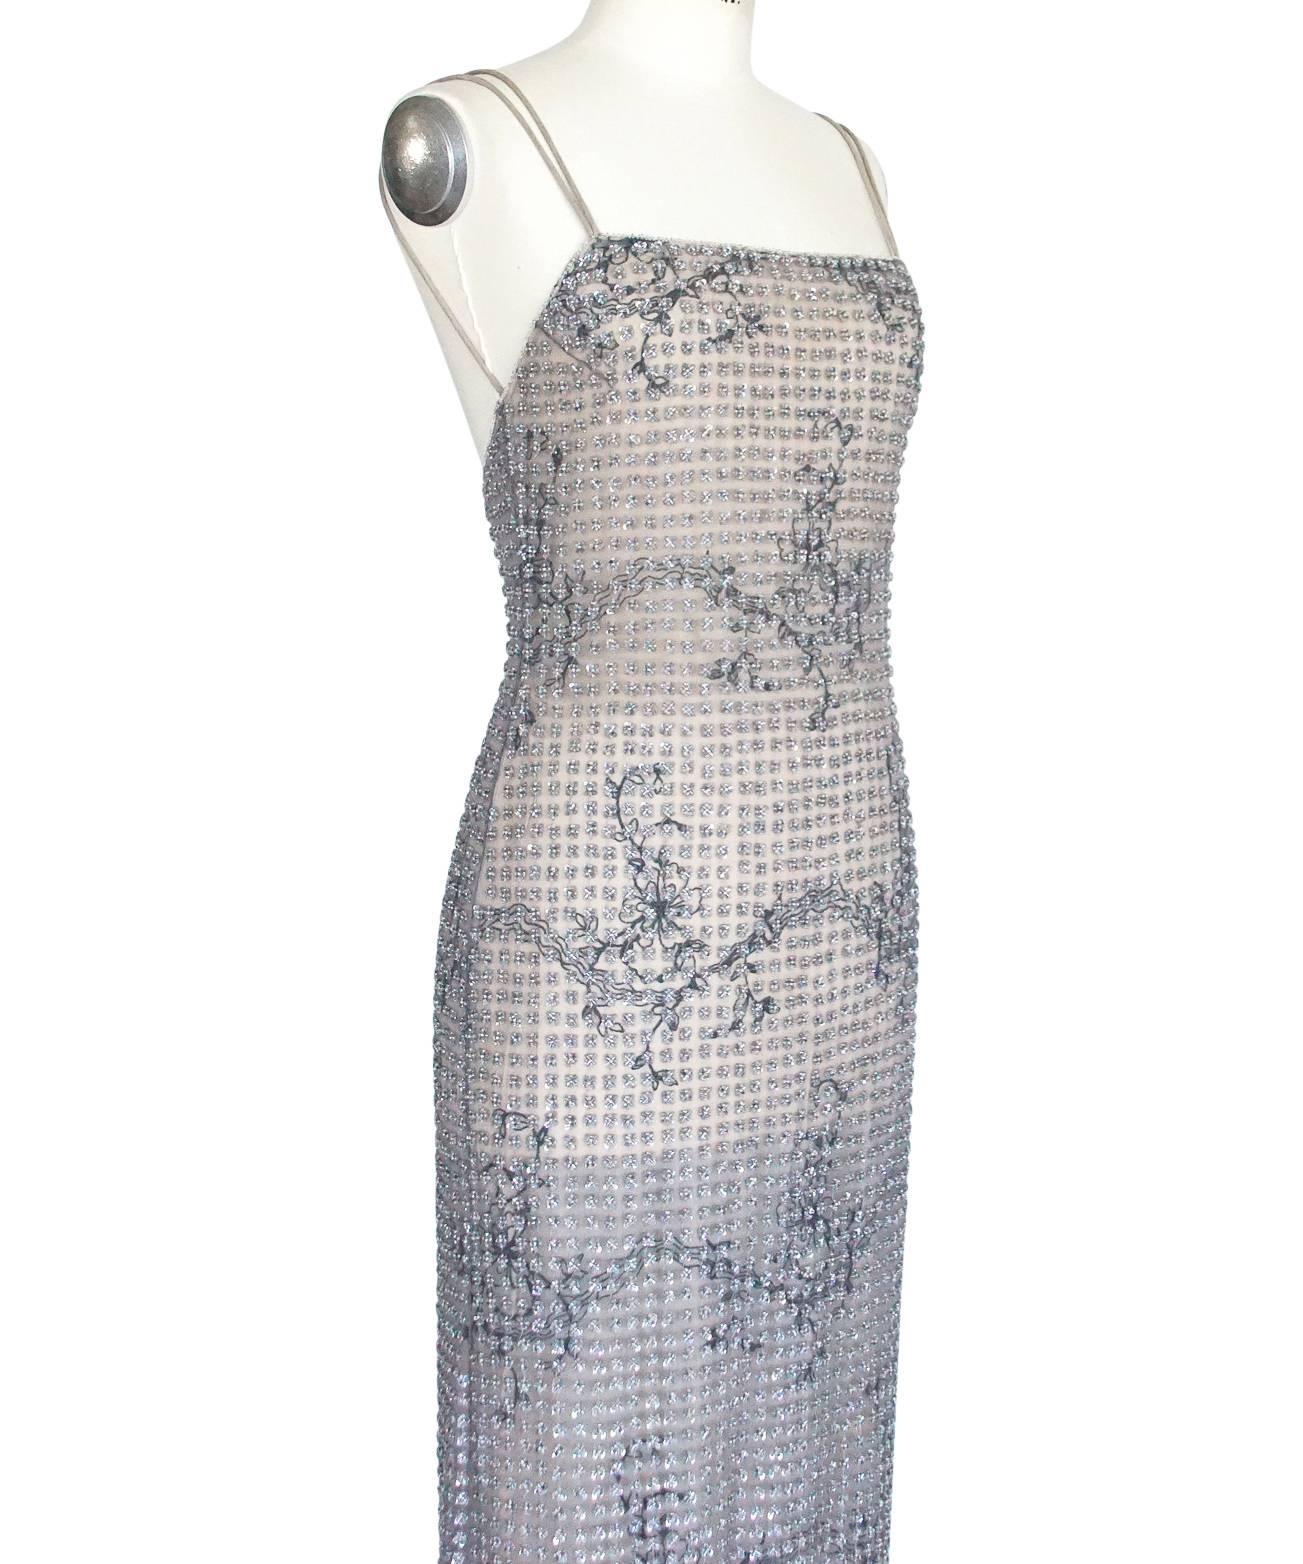 Giorgio Armani Giorgio Armani Kleid Perlen Fleurette auf Tüll Formal Kleid 40 / 6 Neu im Angebot 2